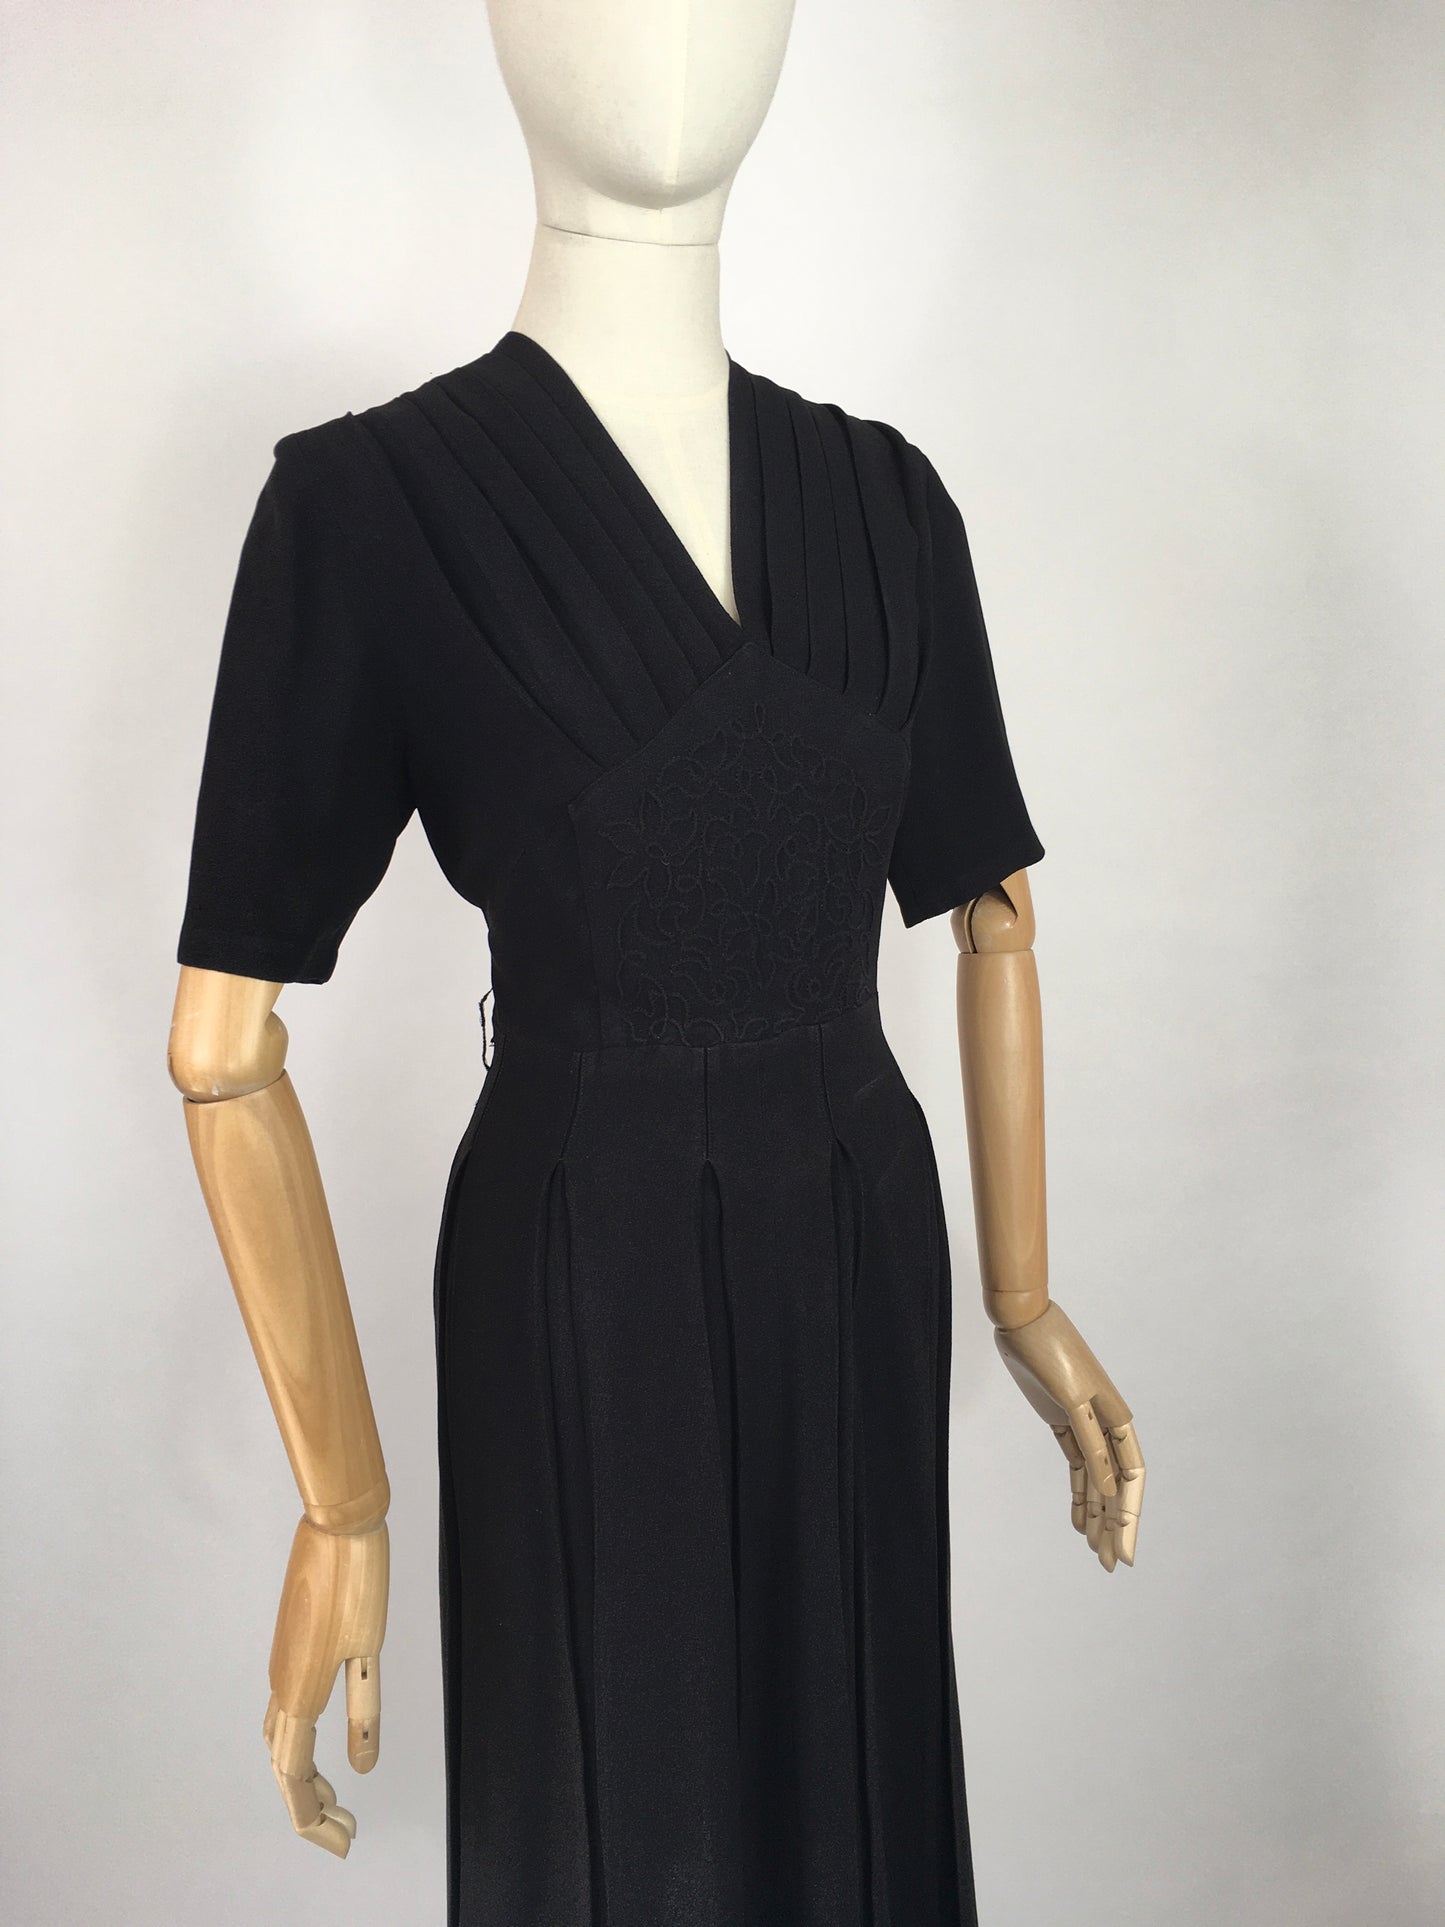 Original 1940’s Black Crepe Dress - With a Lovely Soutache Waist Panel Detailing